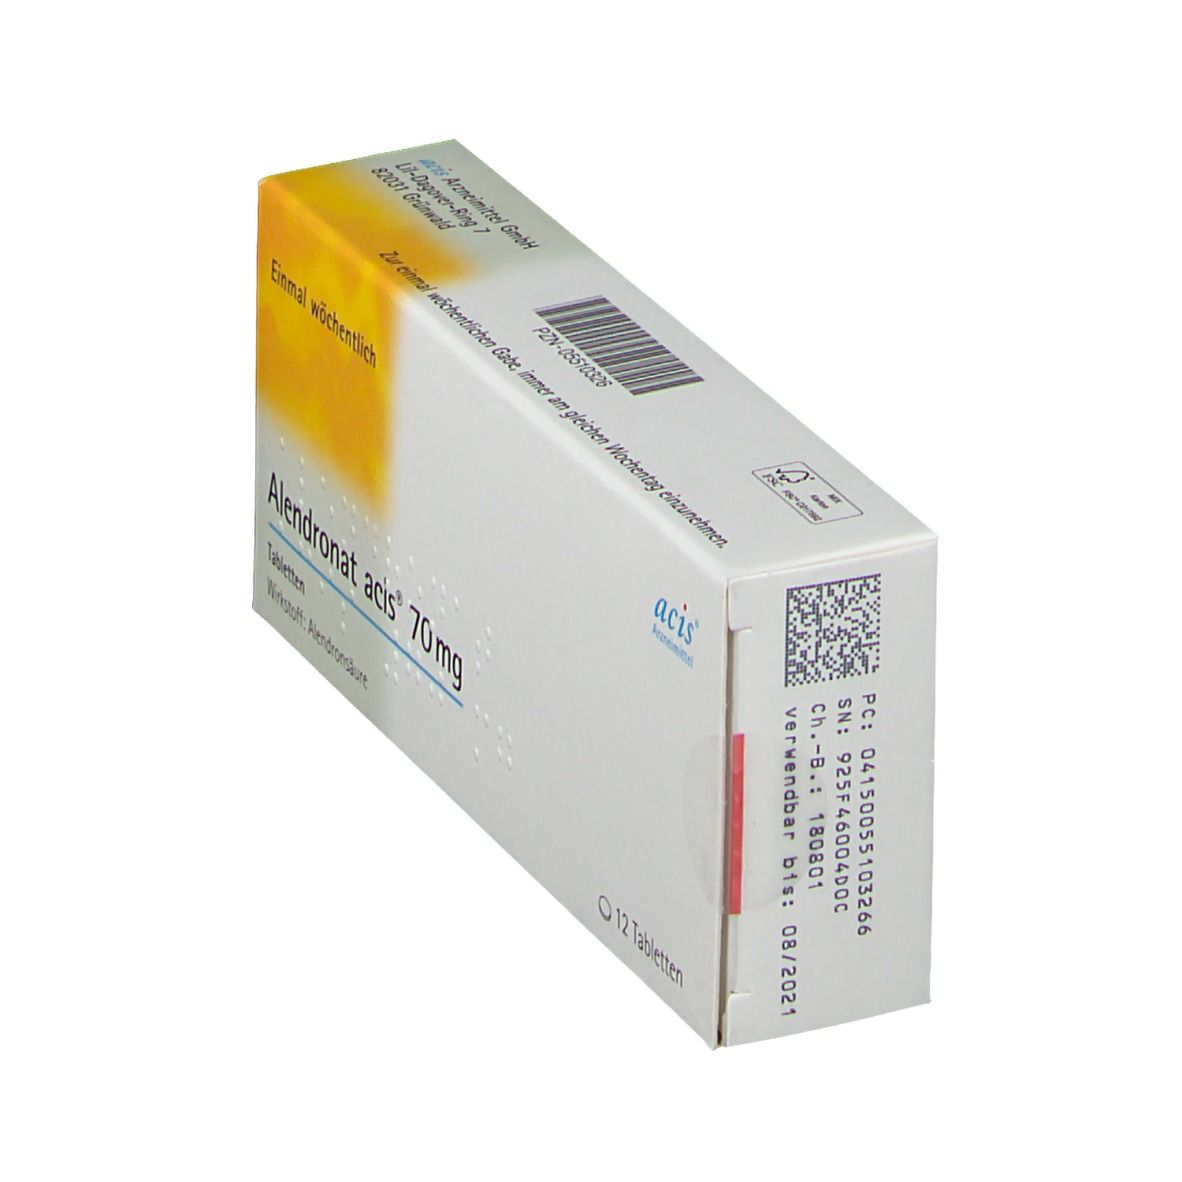 Alendronat acis® 70 mg